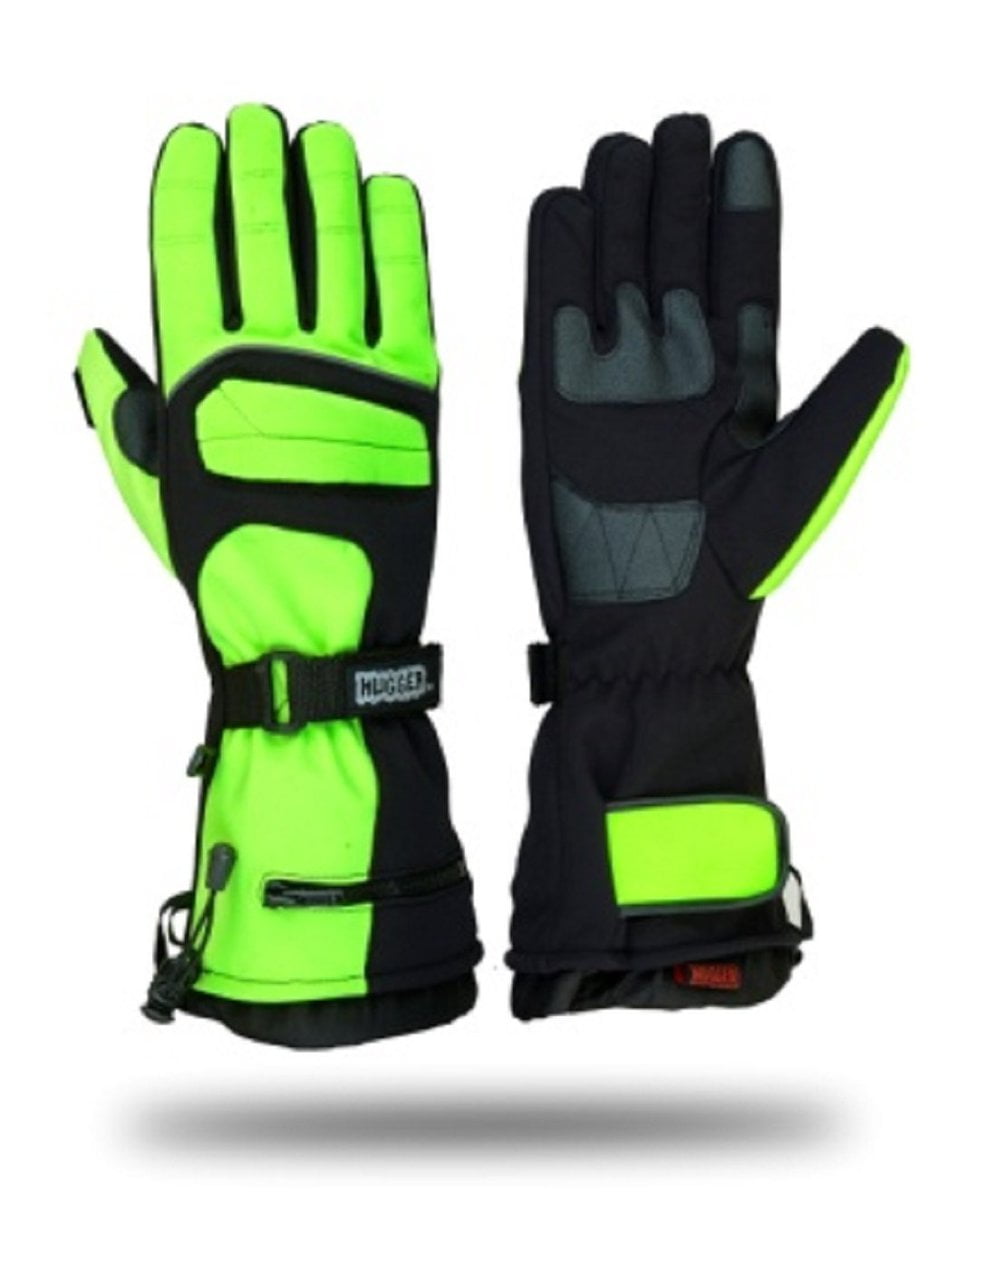 Hugger Winter Men's Textile Gauntlet Snowmobile Ski Gloves Winter Driving